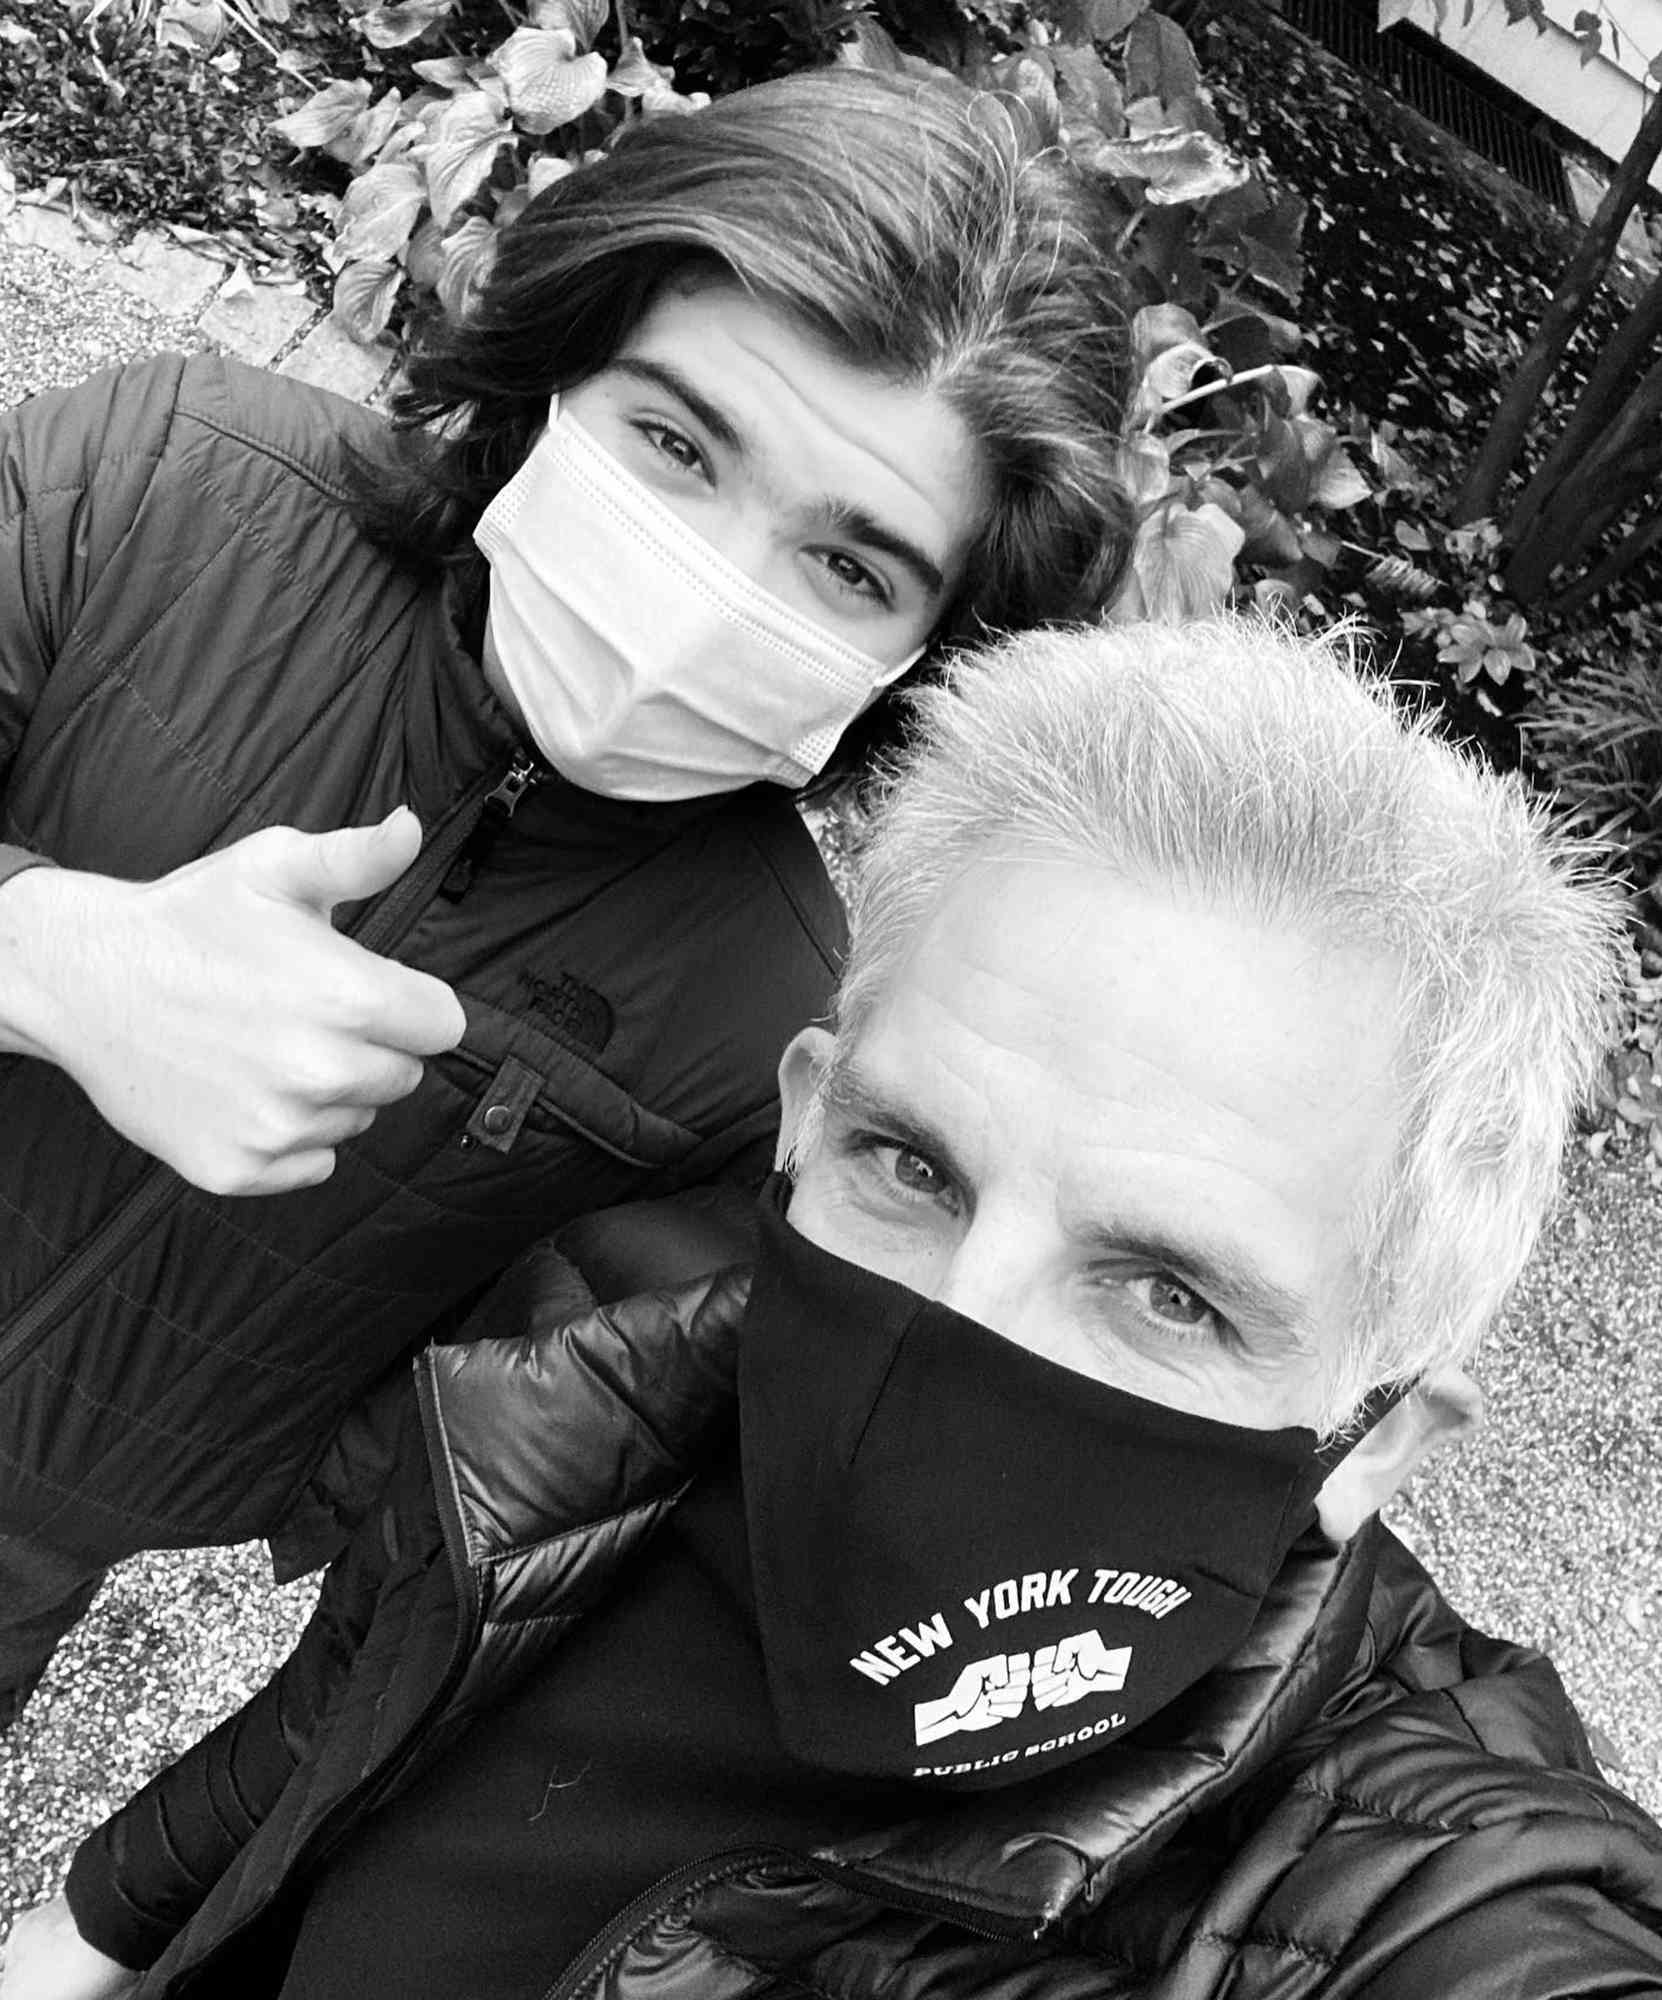 Ben Stiller and his son